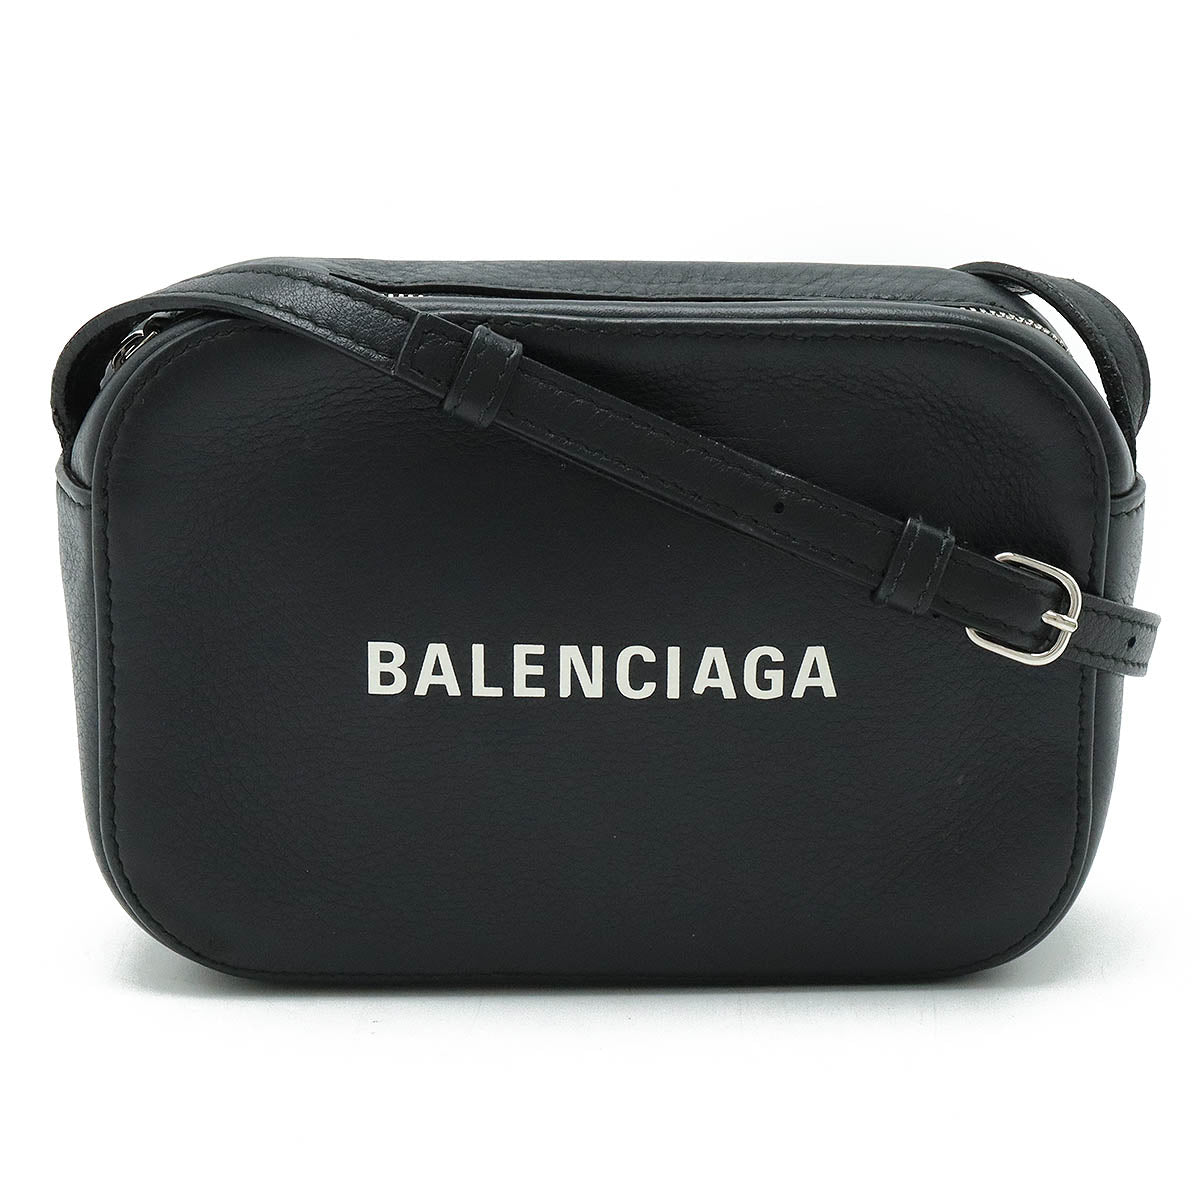 BALENCIAGA VALENCIAGA EVRIDAY CAMERA BAG XS SHOULDER BAG POSHET BLACK BLACK BLACK 552372 BLUMIN BLUMIN SHOP